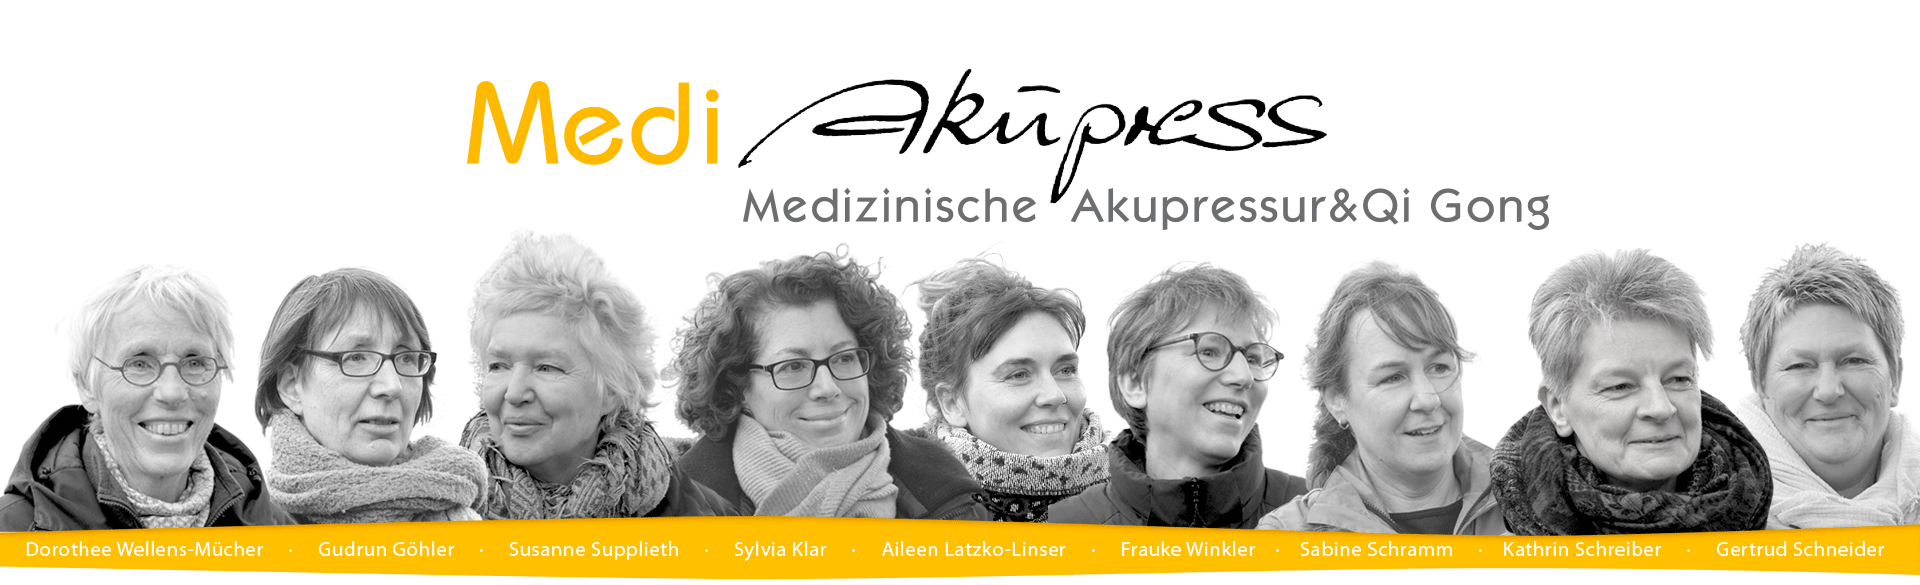 MediAkupress-Team